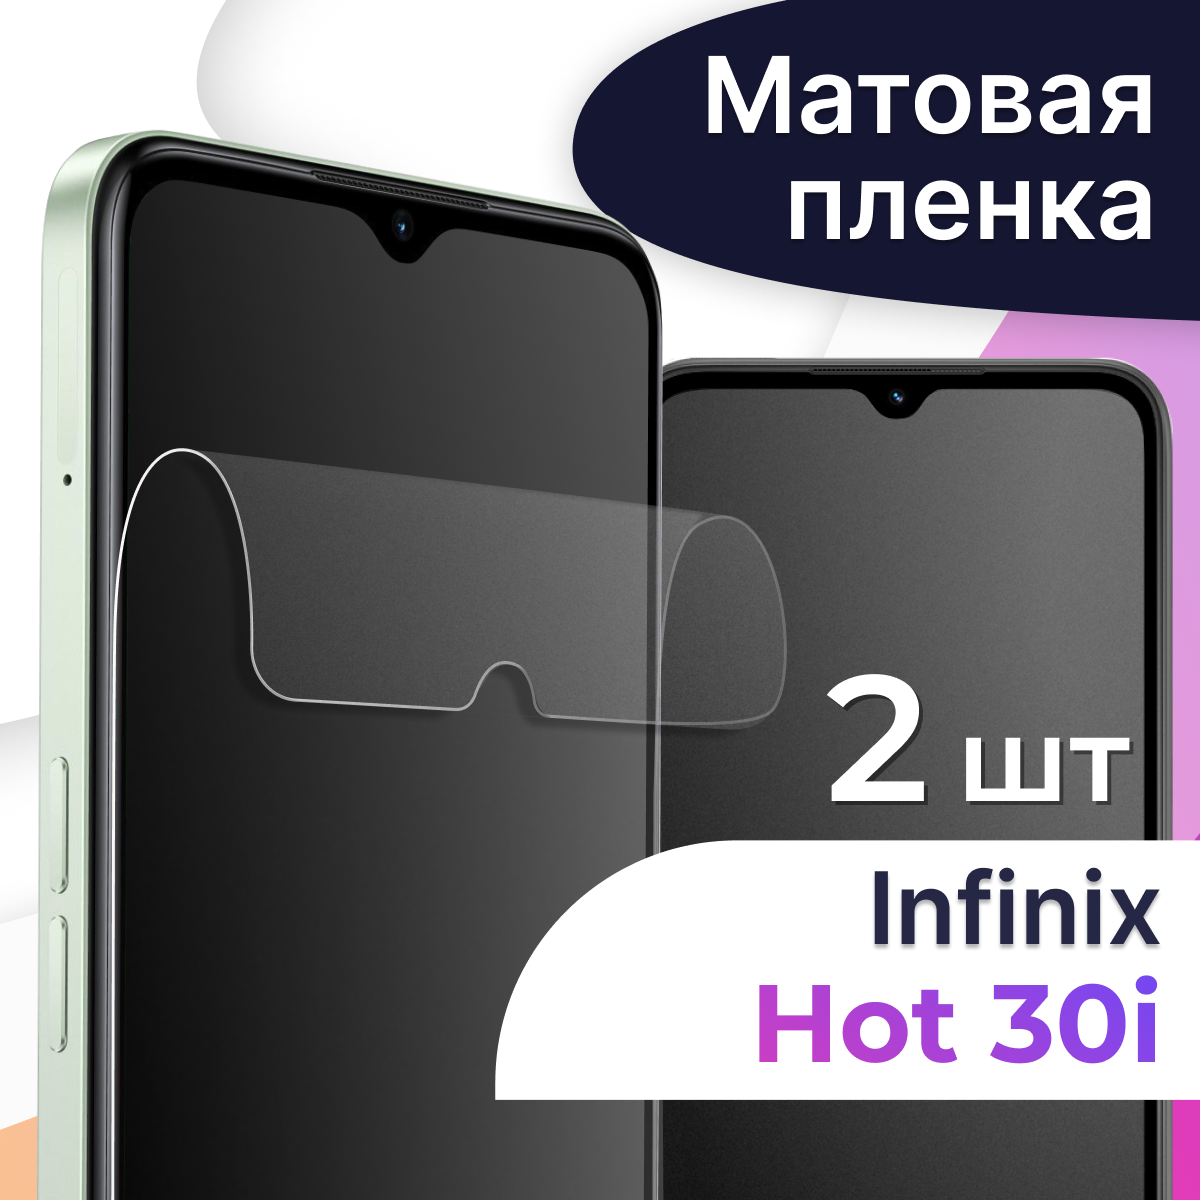 Матовая пленка на телефон Infinix Hot 30i / Гидрогелевая противоударная пленка для смартфона Инфиникс Хот 30 аи / Защитная пленка